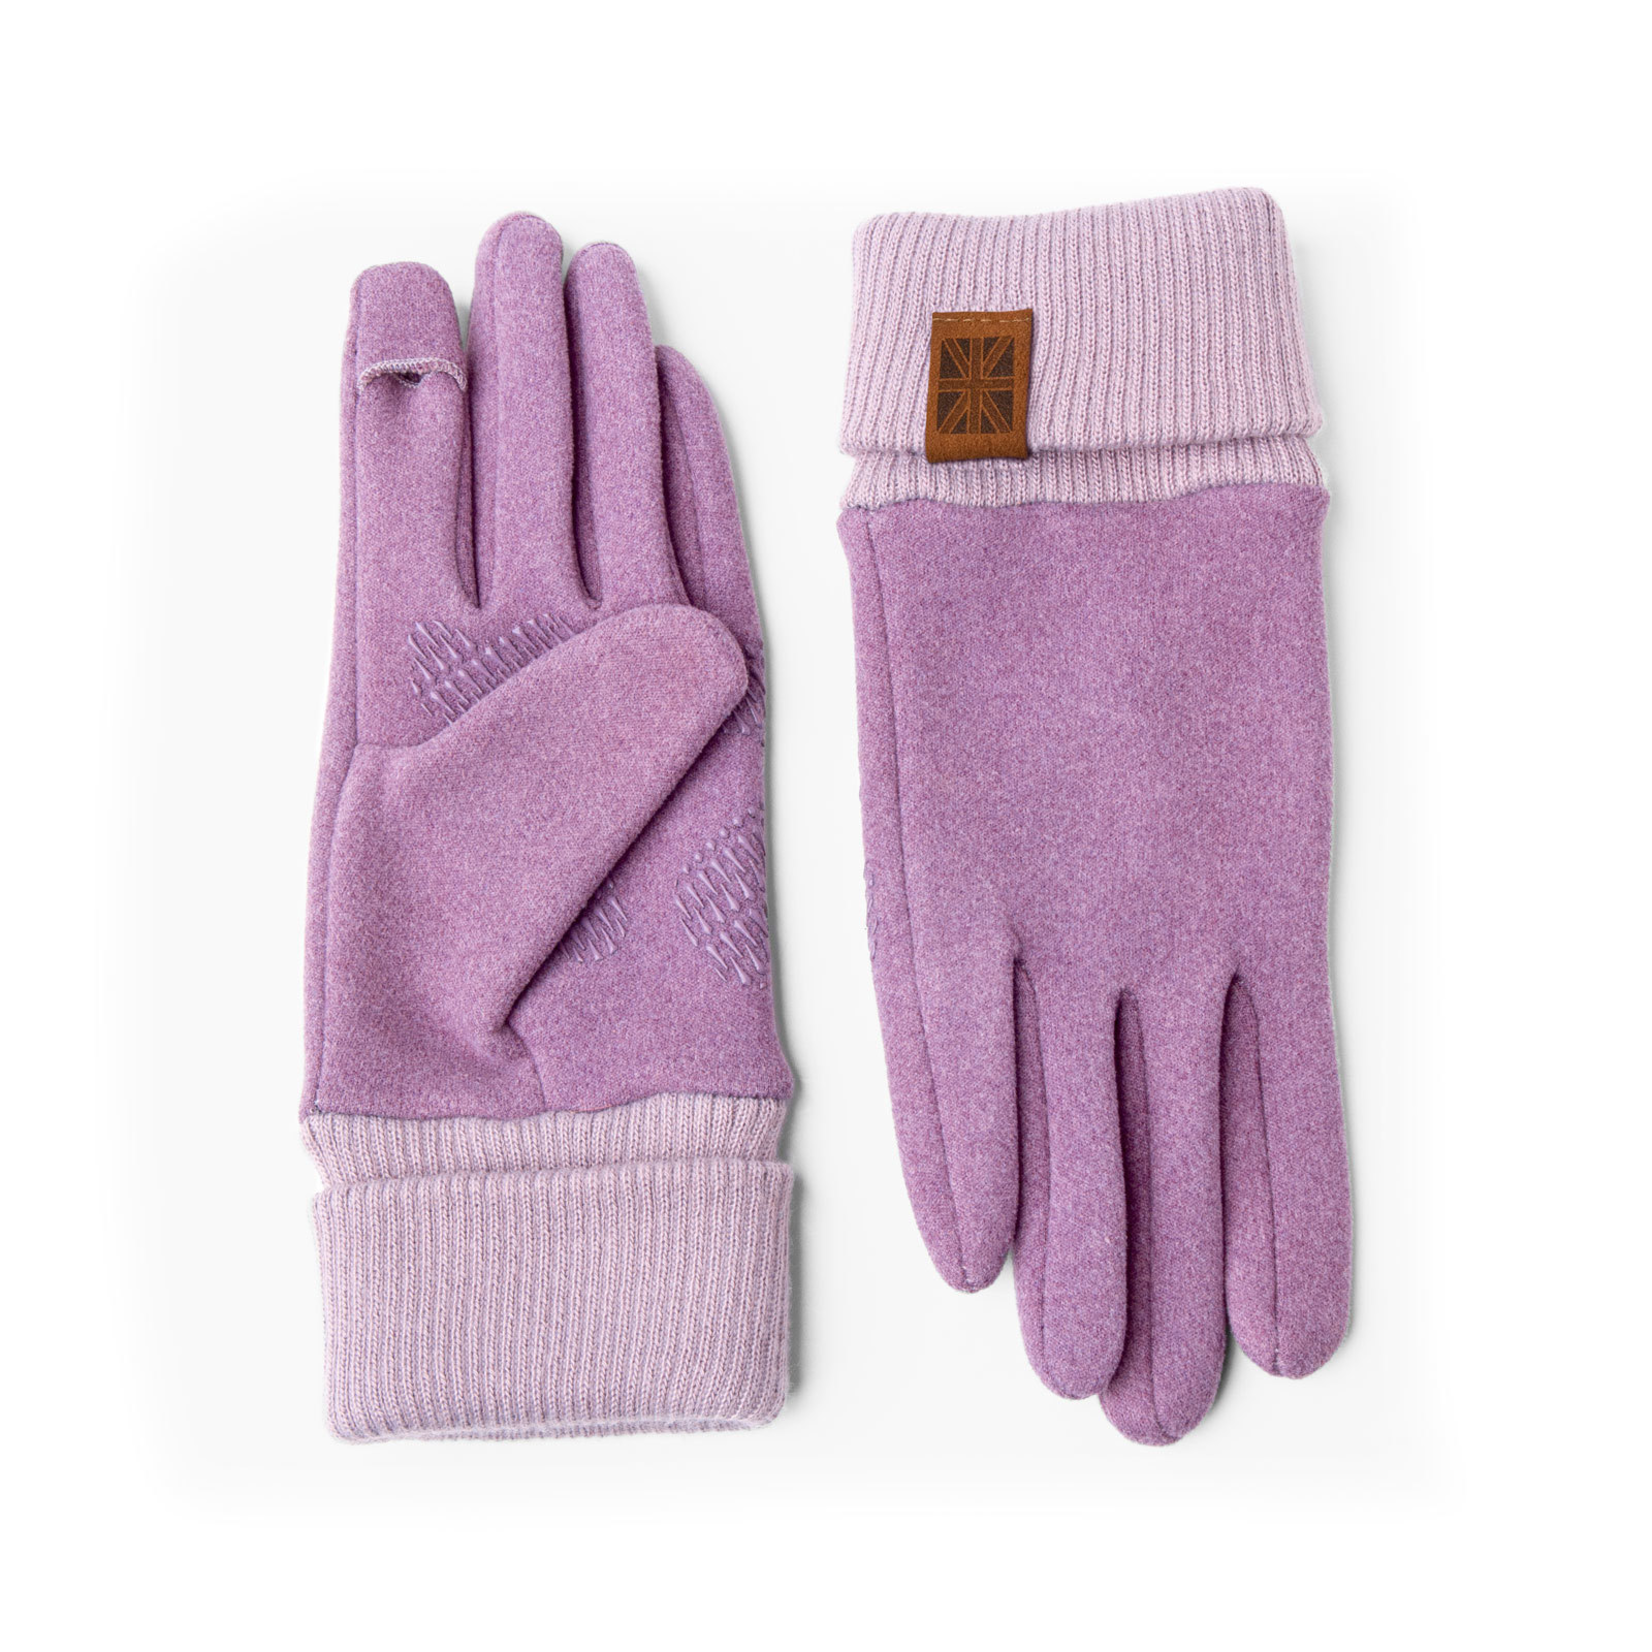 Britt's Knits Britt’s Knits Pro Tip Texting Gloves Purple